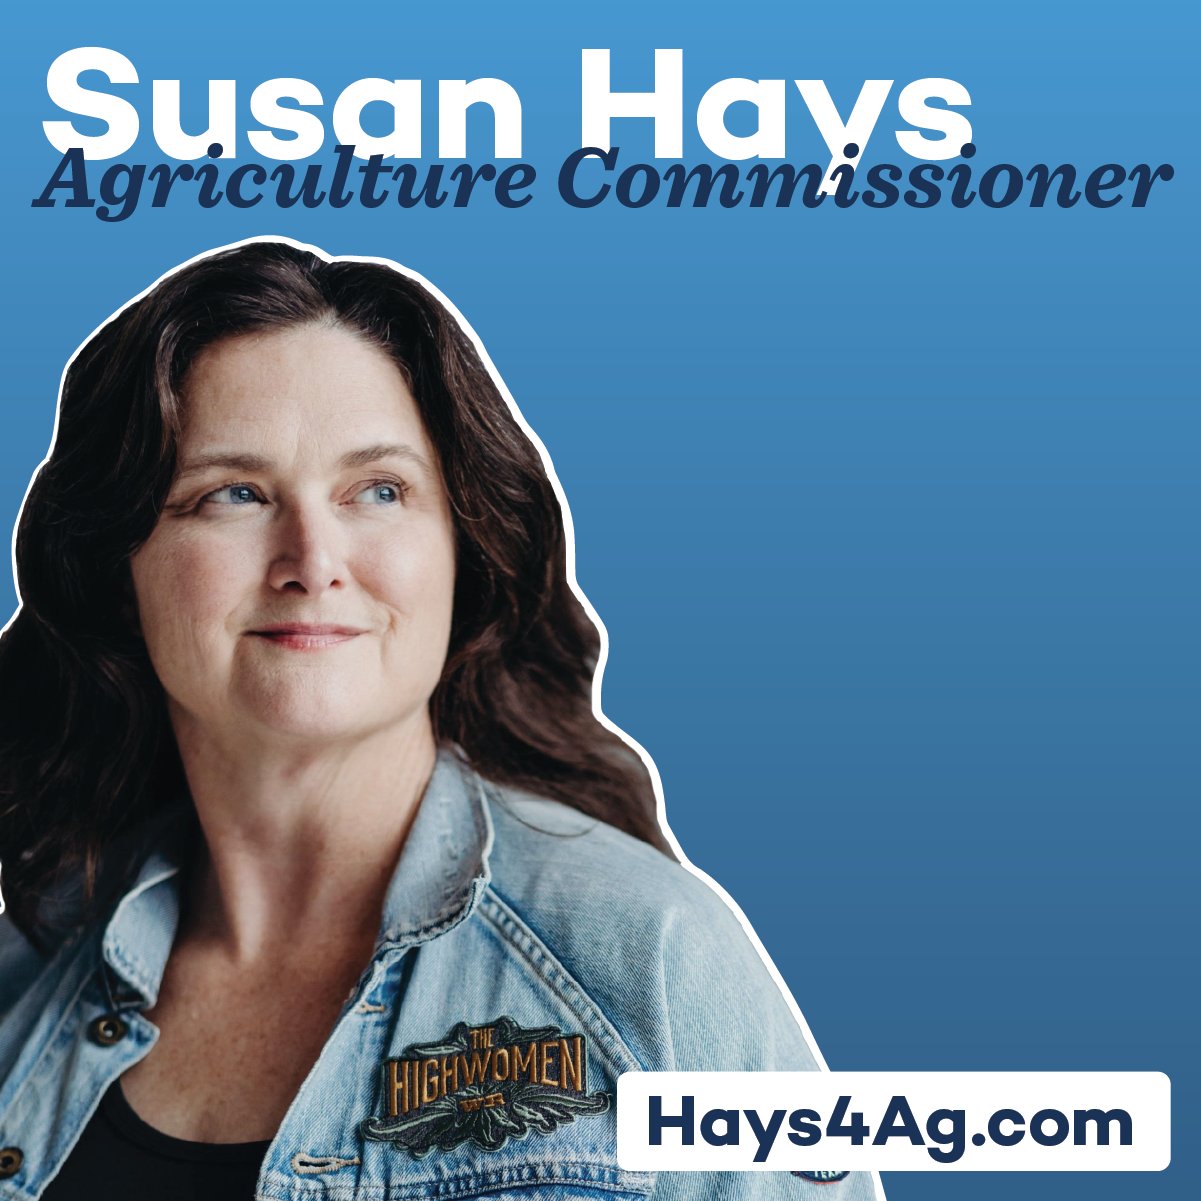 Susan Hays - Agriculture Commissionerhays4ag.com